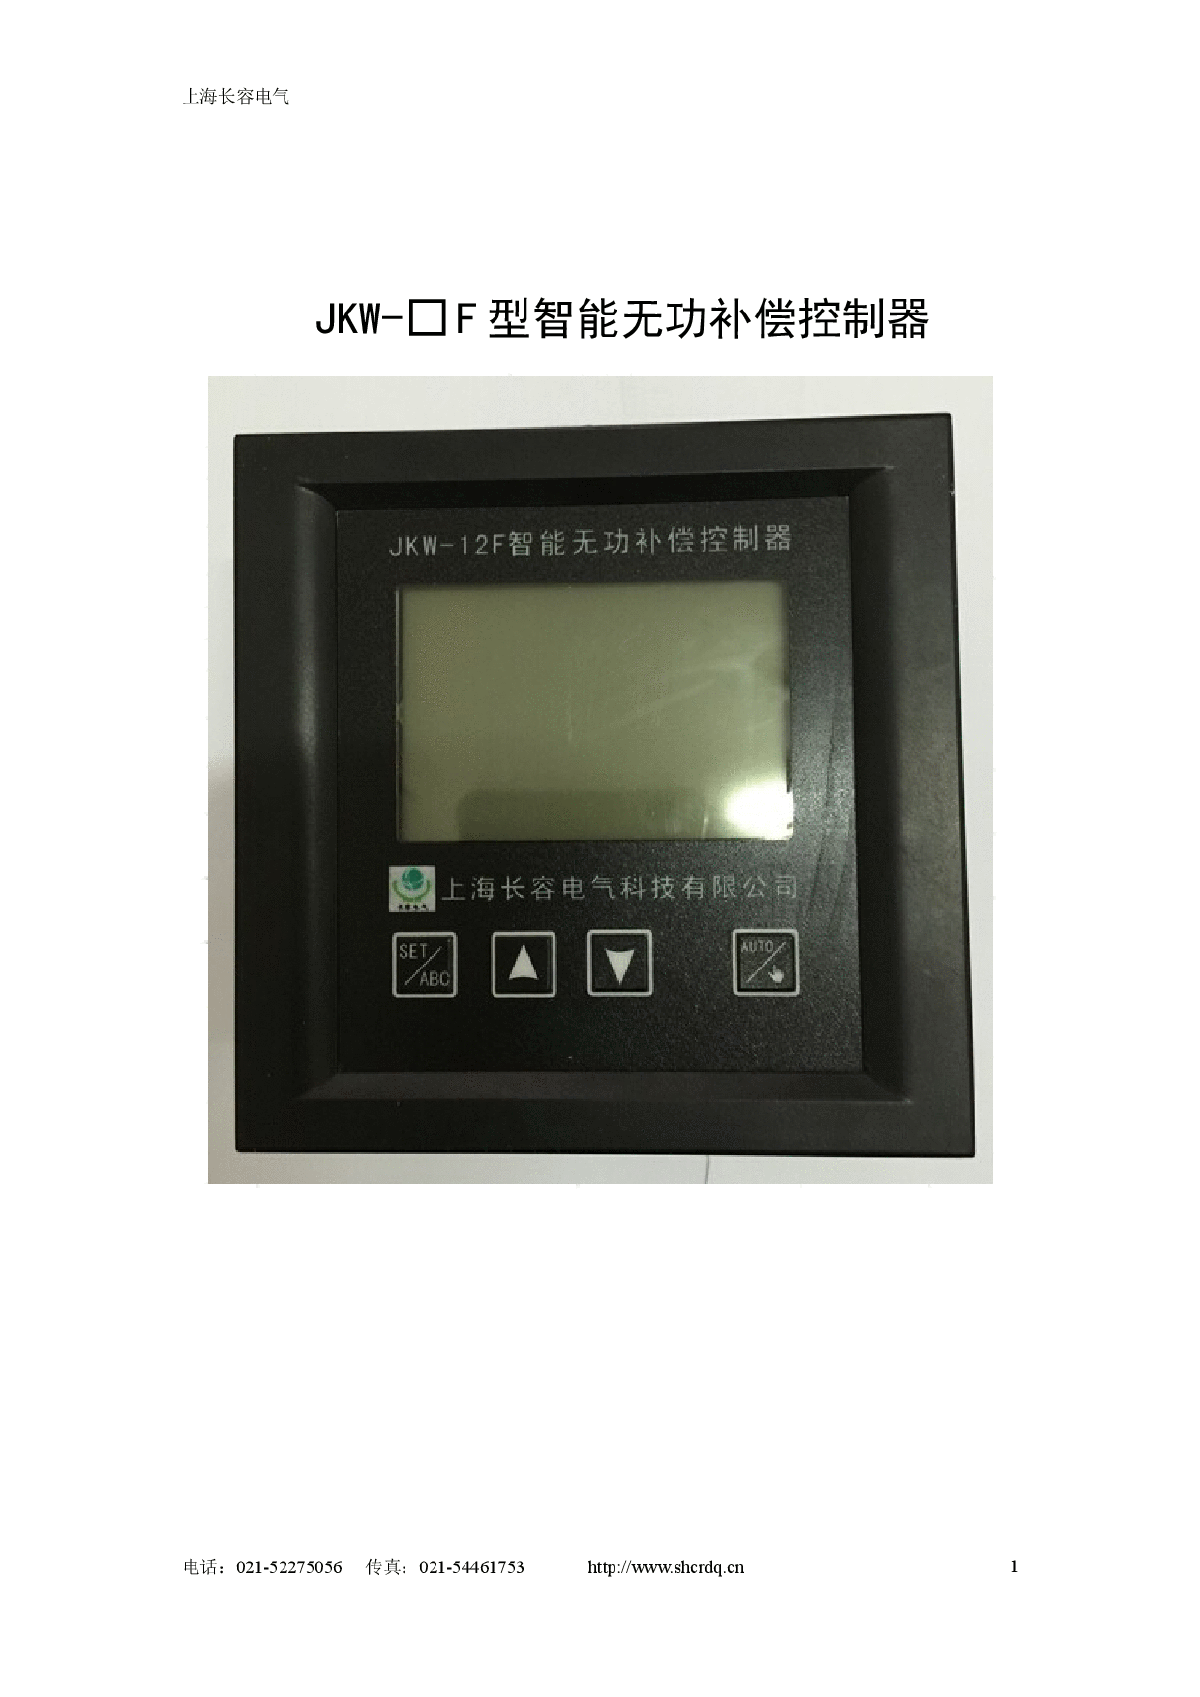 JKW-□F型智能无功补偿控制器-图一